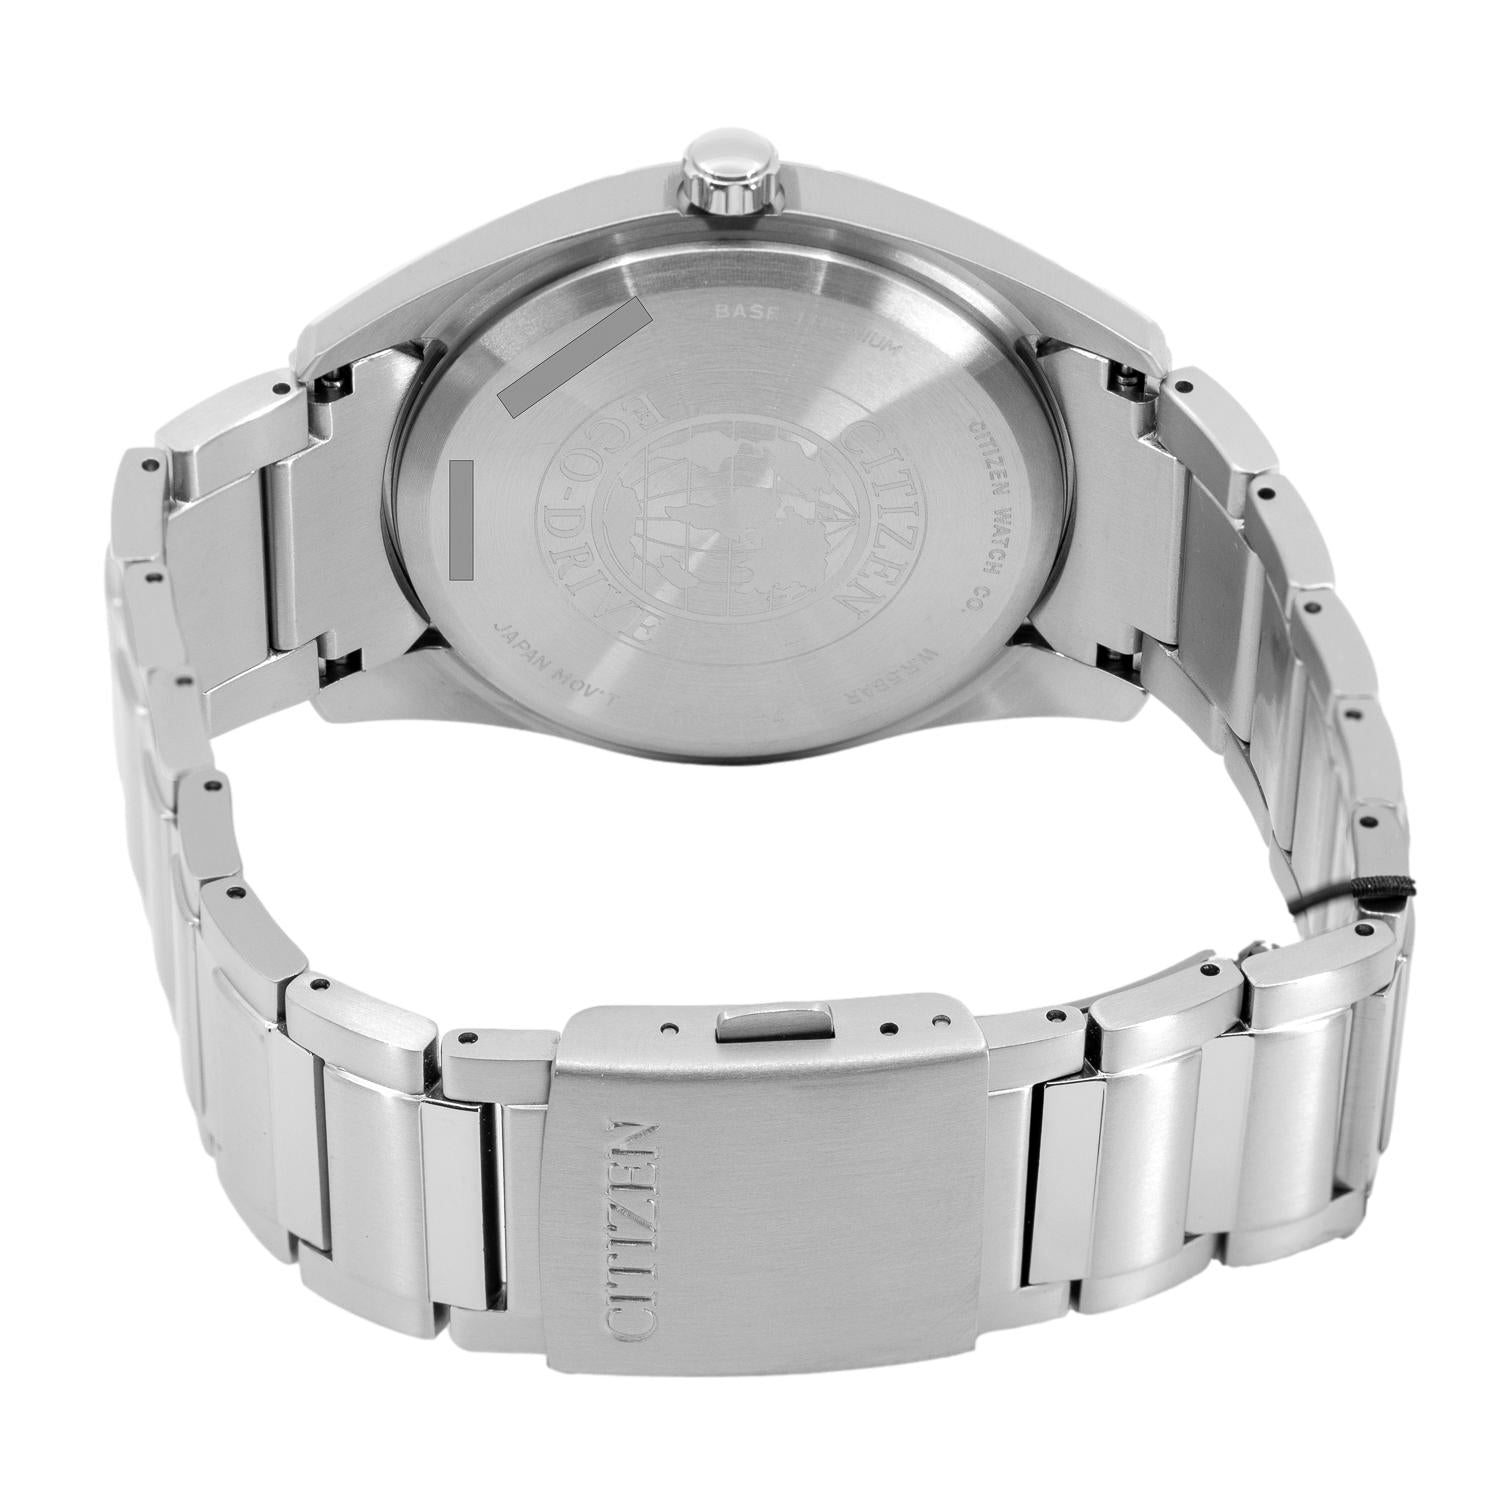 AW1640-83H-Citizen Men's AW1640-83H SuperTitanium Anthracite Dial Watch